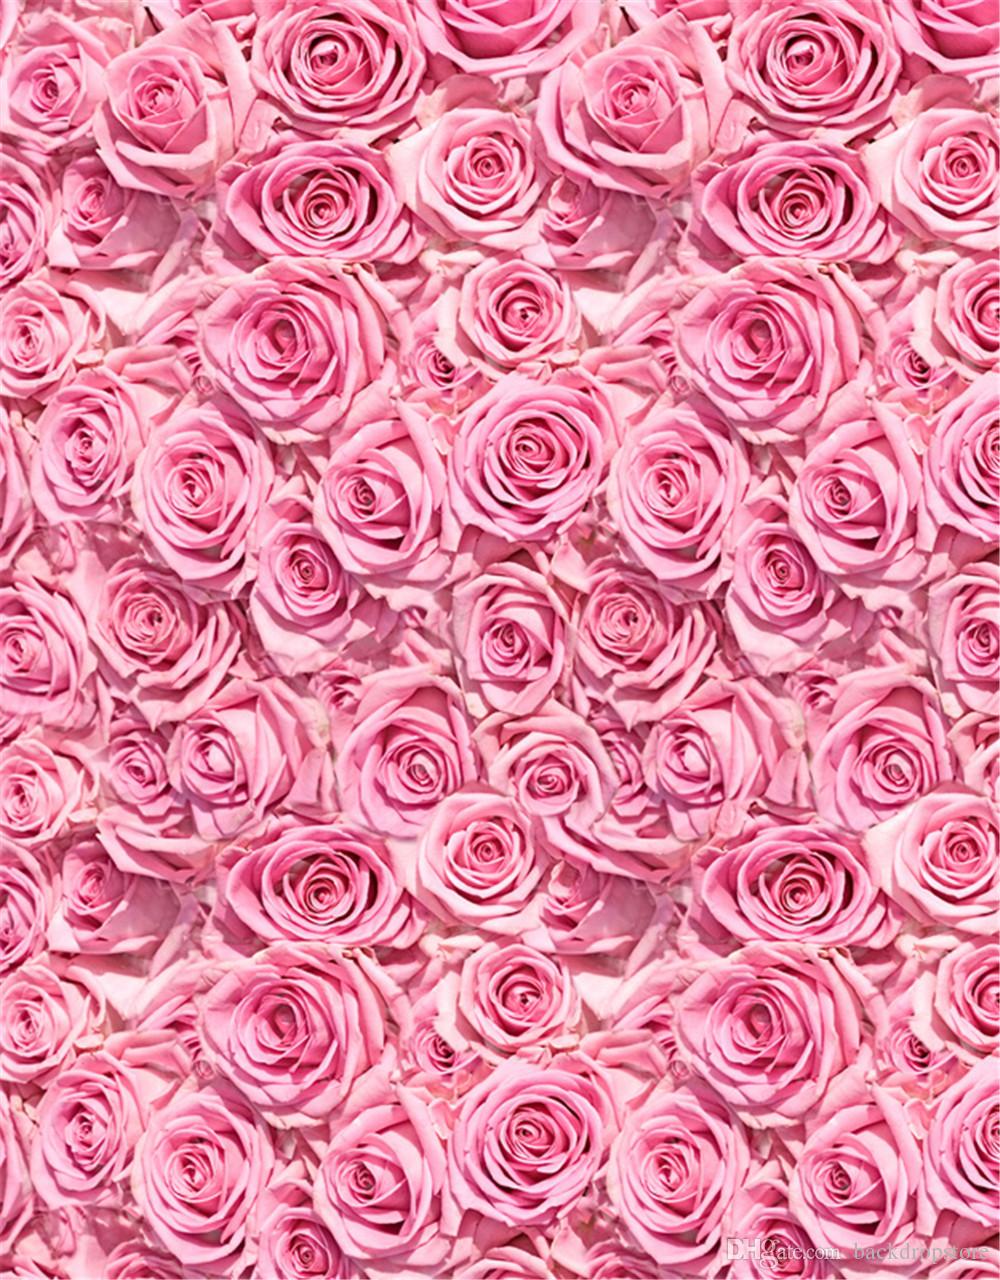 2019 Digital Printed Pink Rose 3D Backgrounds Baby Newborn